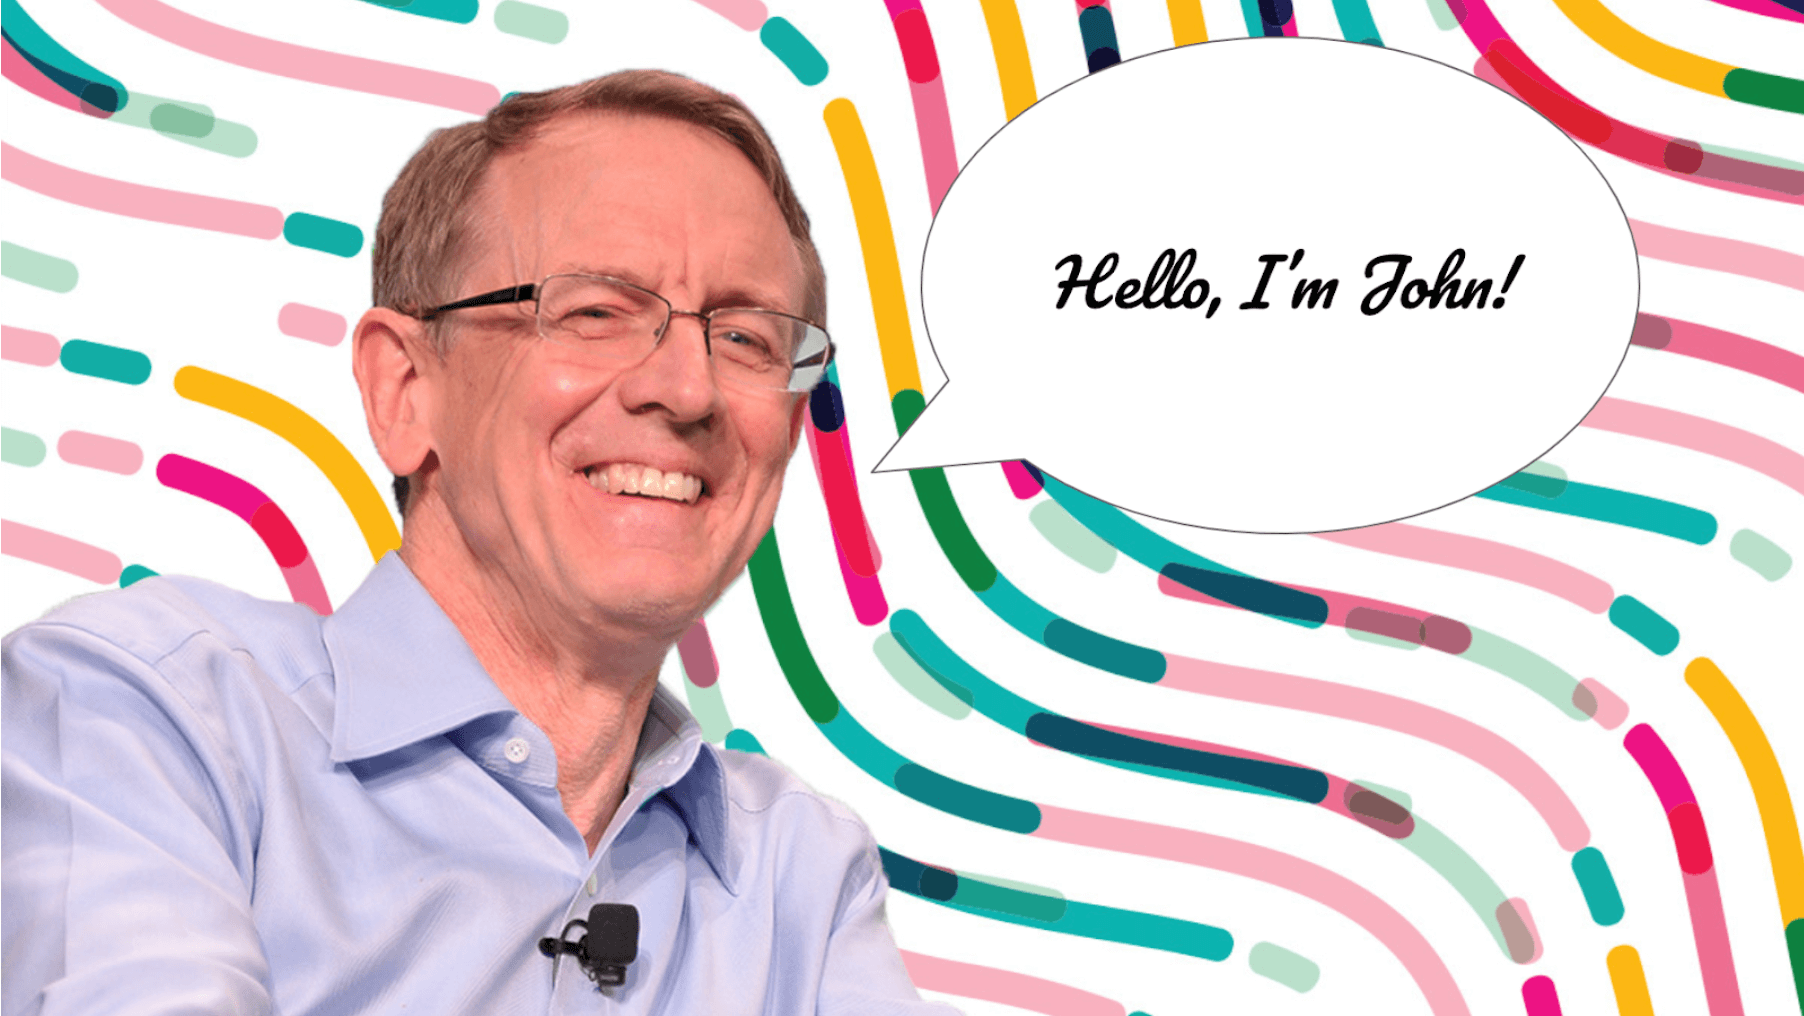 John Doerr - the man from Google who popularized OKRs